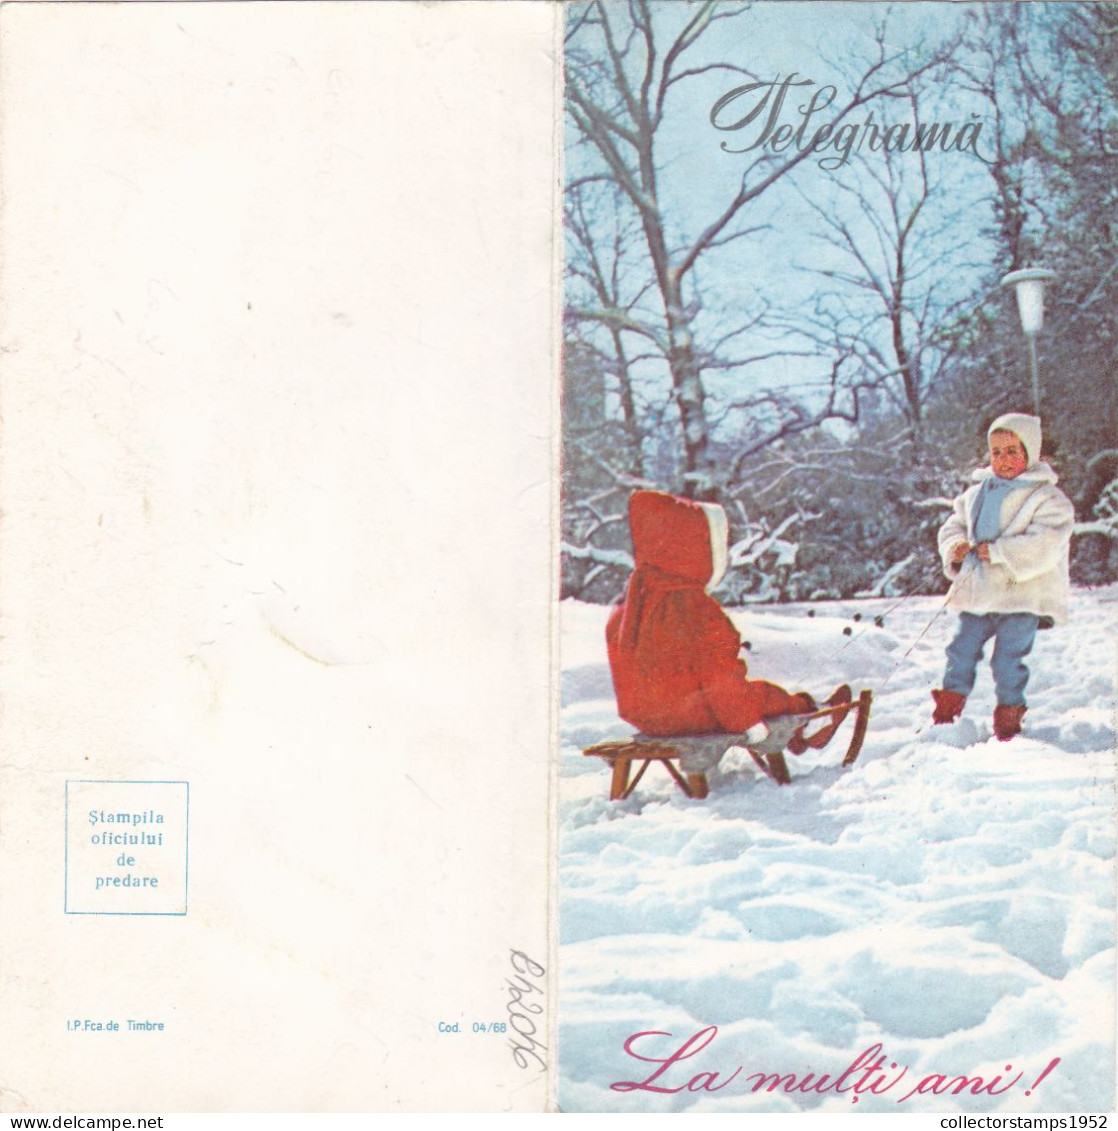 Winter WITH Sledding,TELEGRAM, TELEGRAPH, 1968, ROMANIA,cod.04/68,LTLx2 - Telégrafos